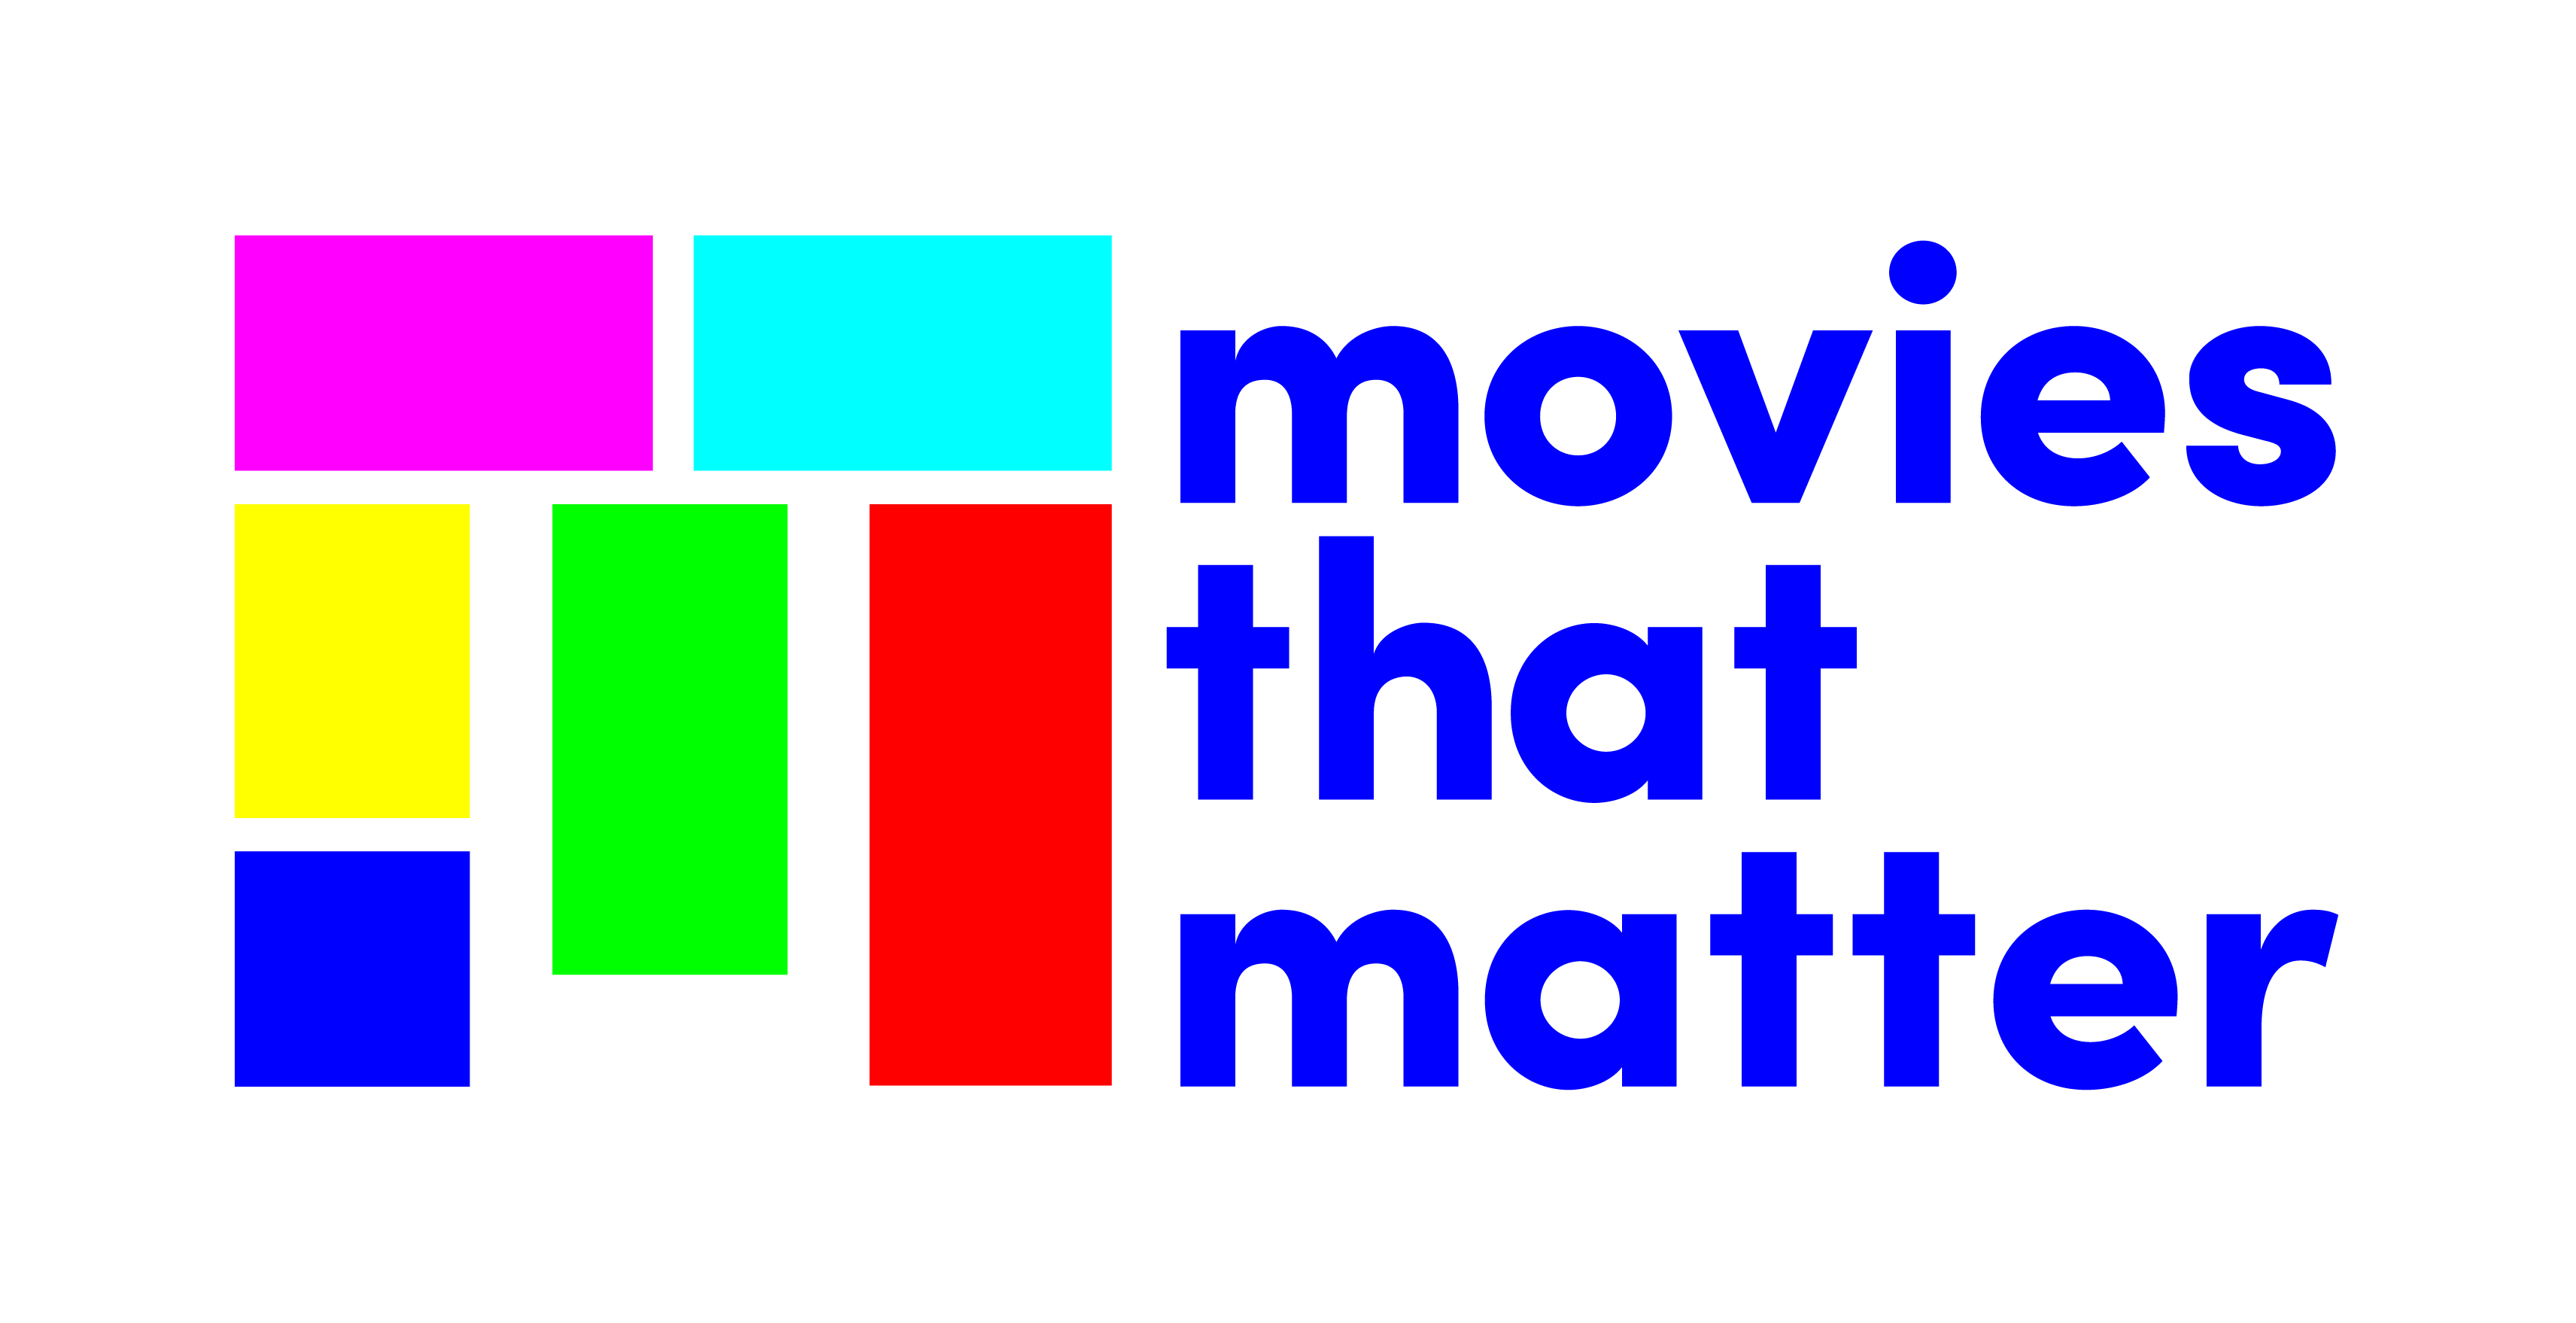 Movies that matter